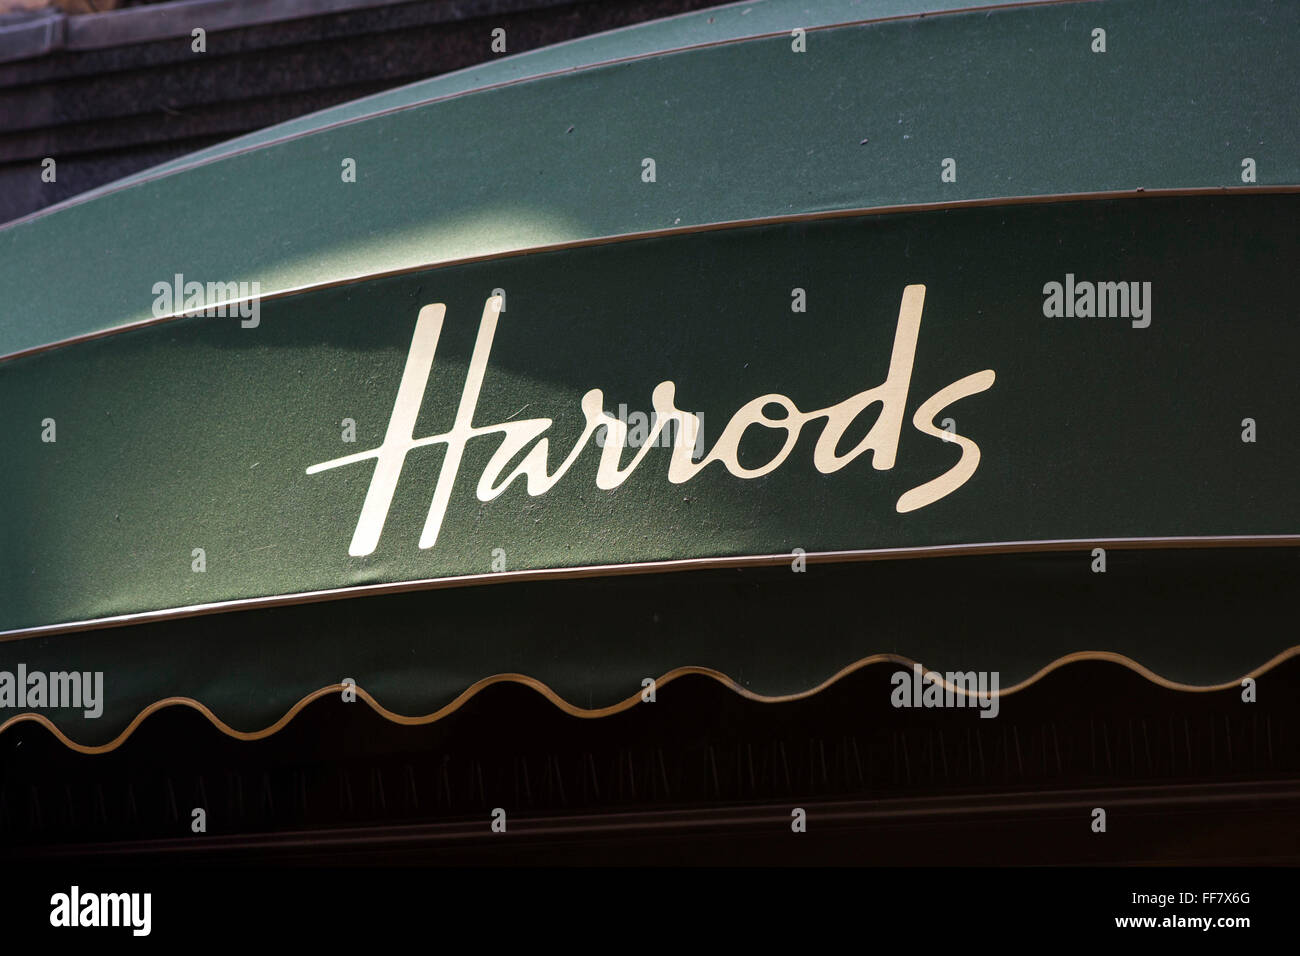 El mundialmente famoso Harrods logotipo impreso en la marquesina verde a través de la ventana de la tienda Harrods, Knightsbridge, Londres, Reino Unido. Foto de stock